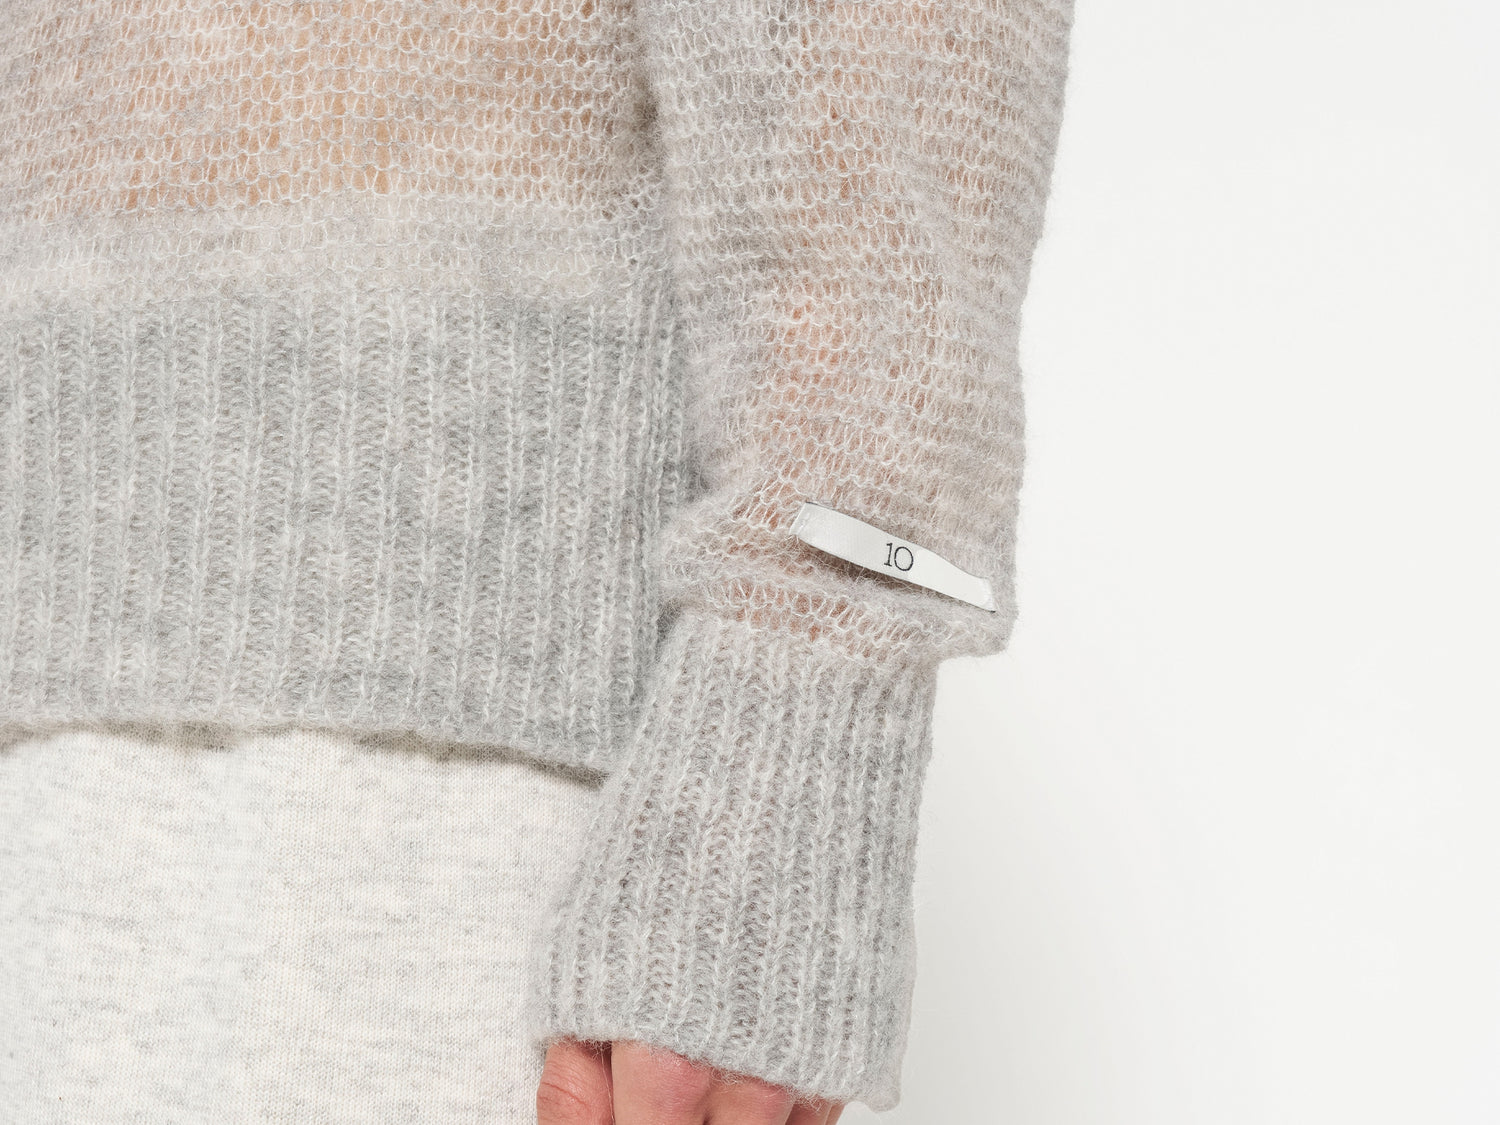 thin off shoulder sweater | light grey melee